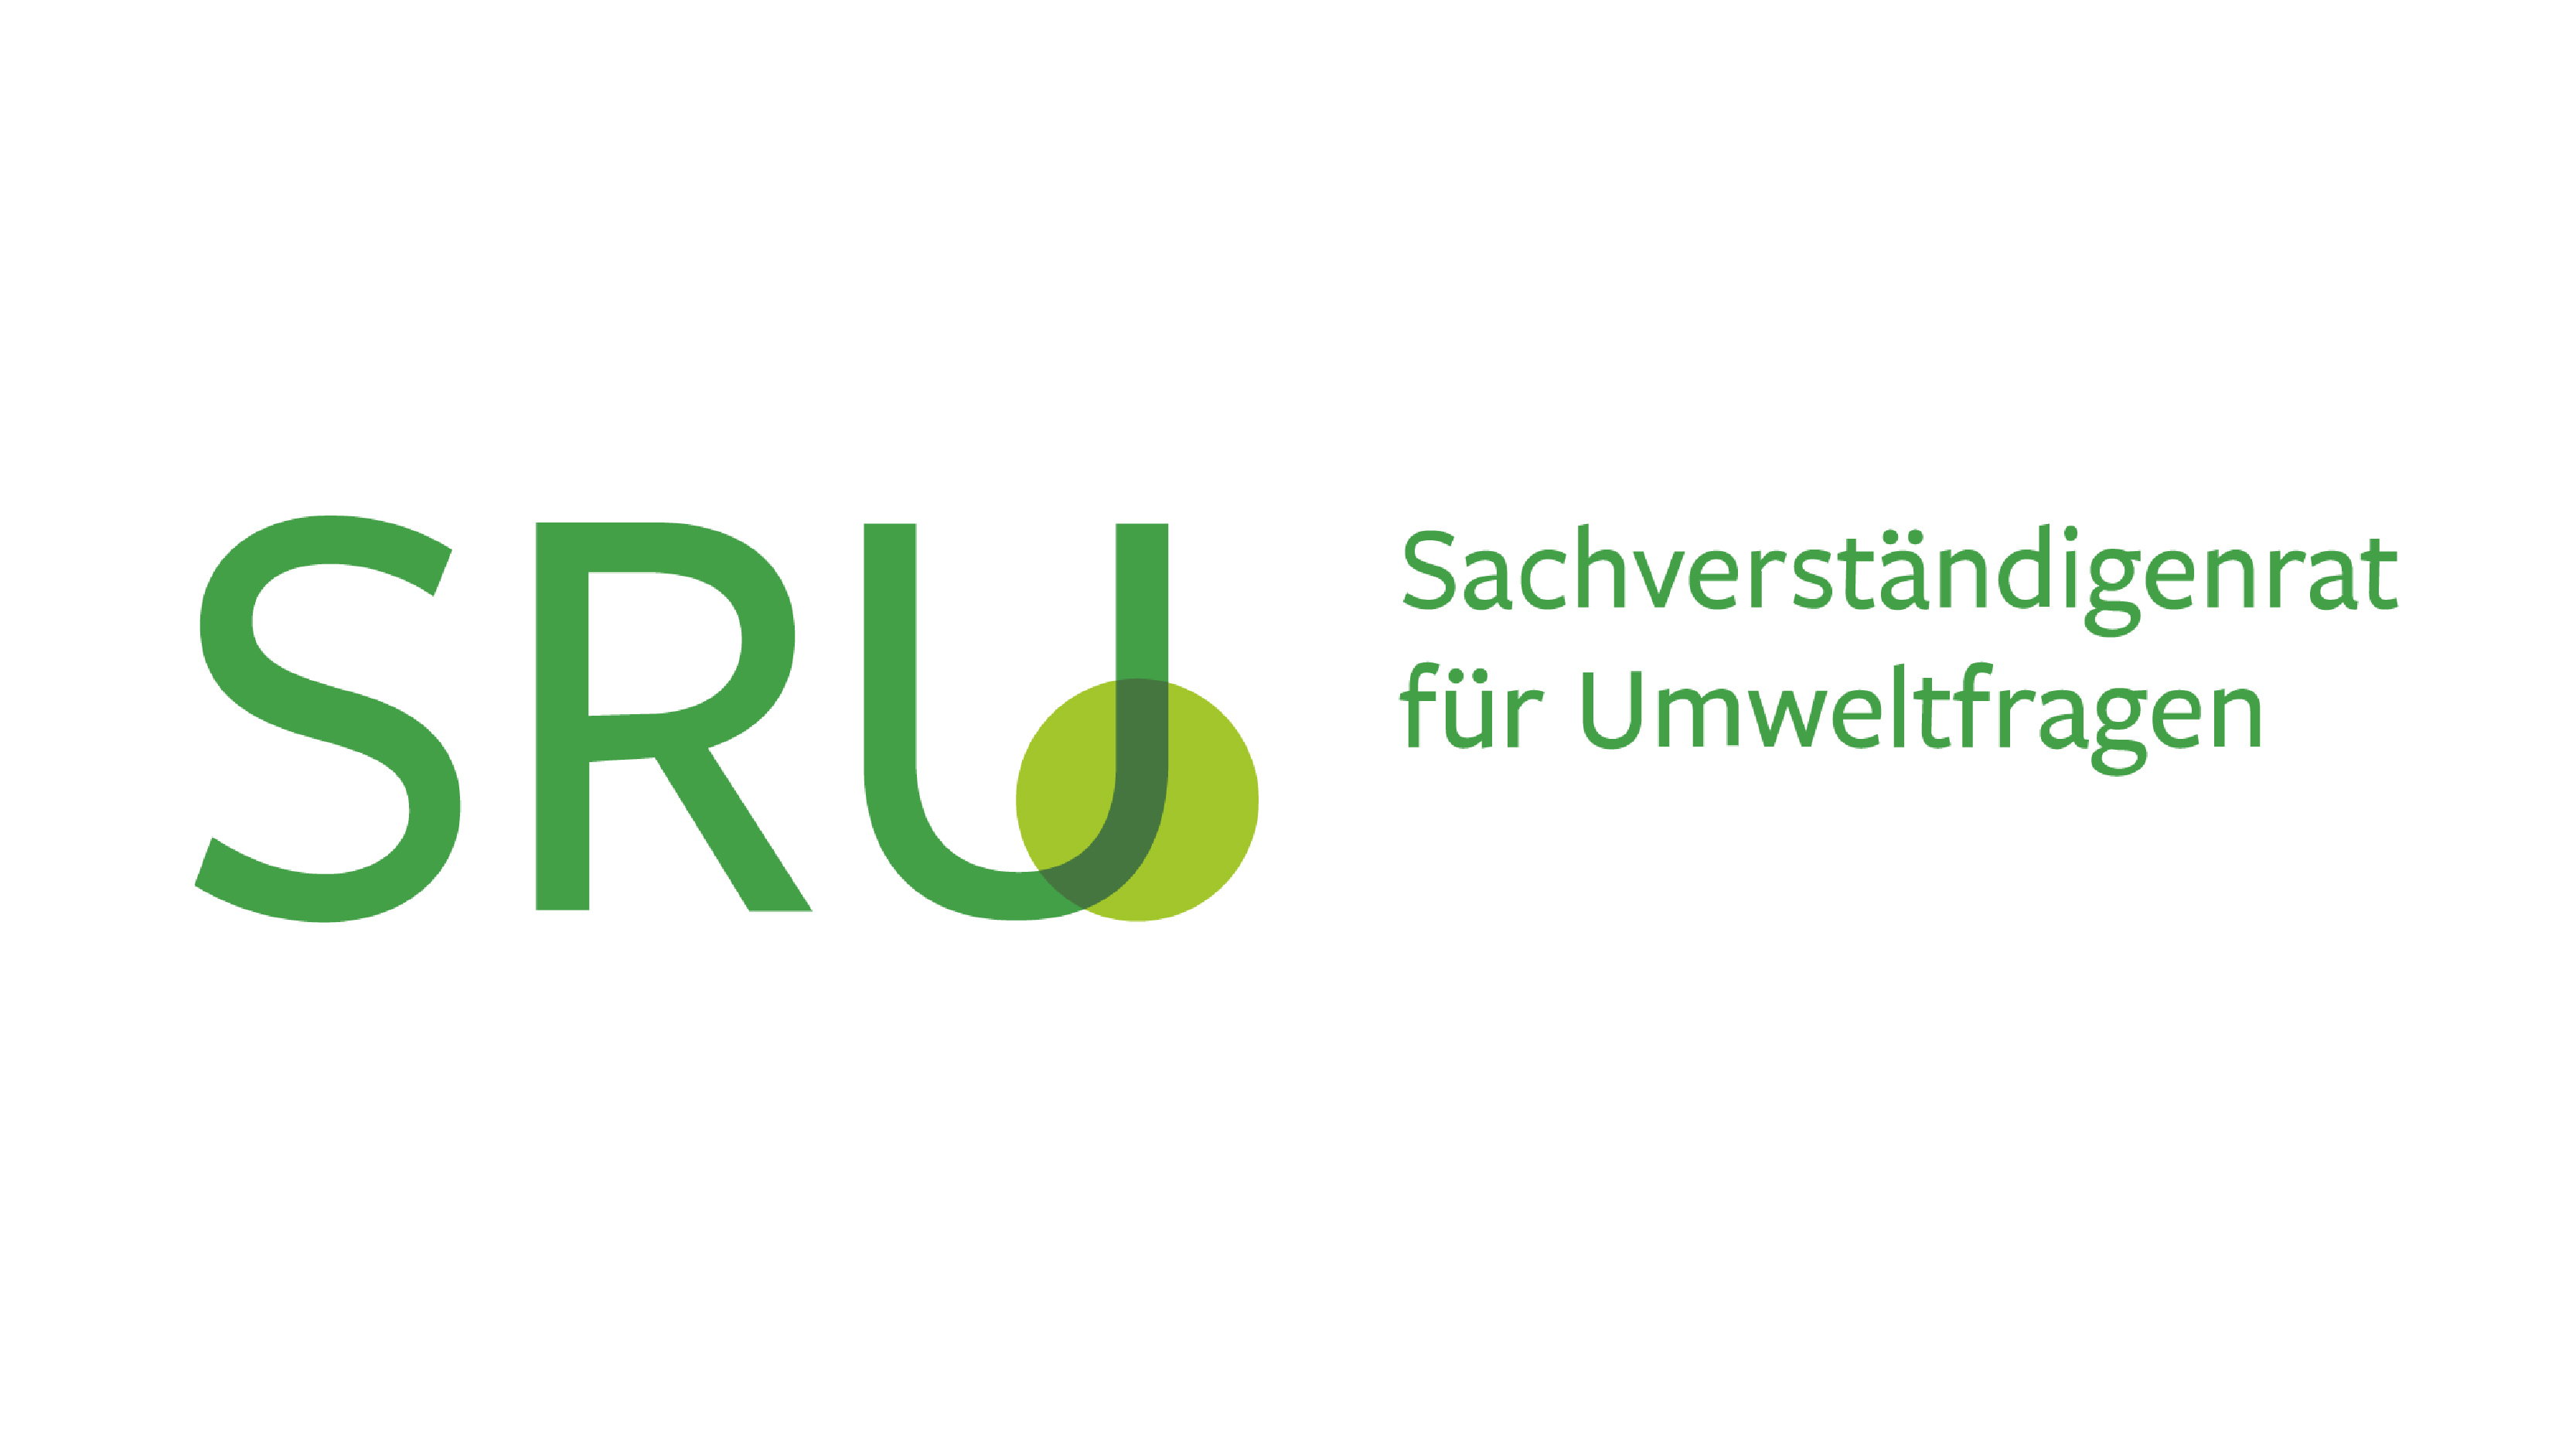 German Advisory Council on the Environment (SRU)